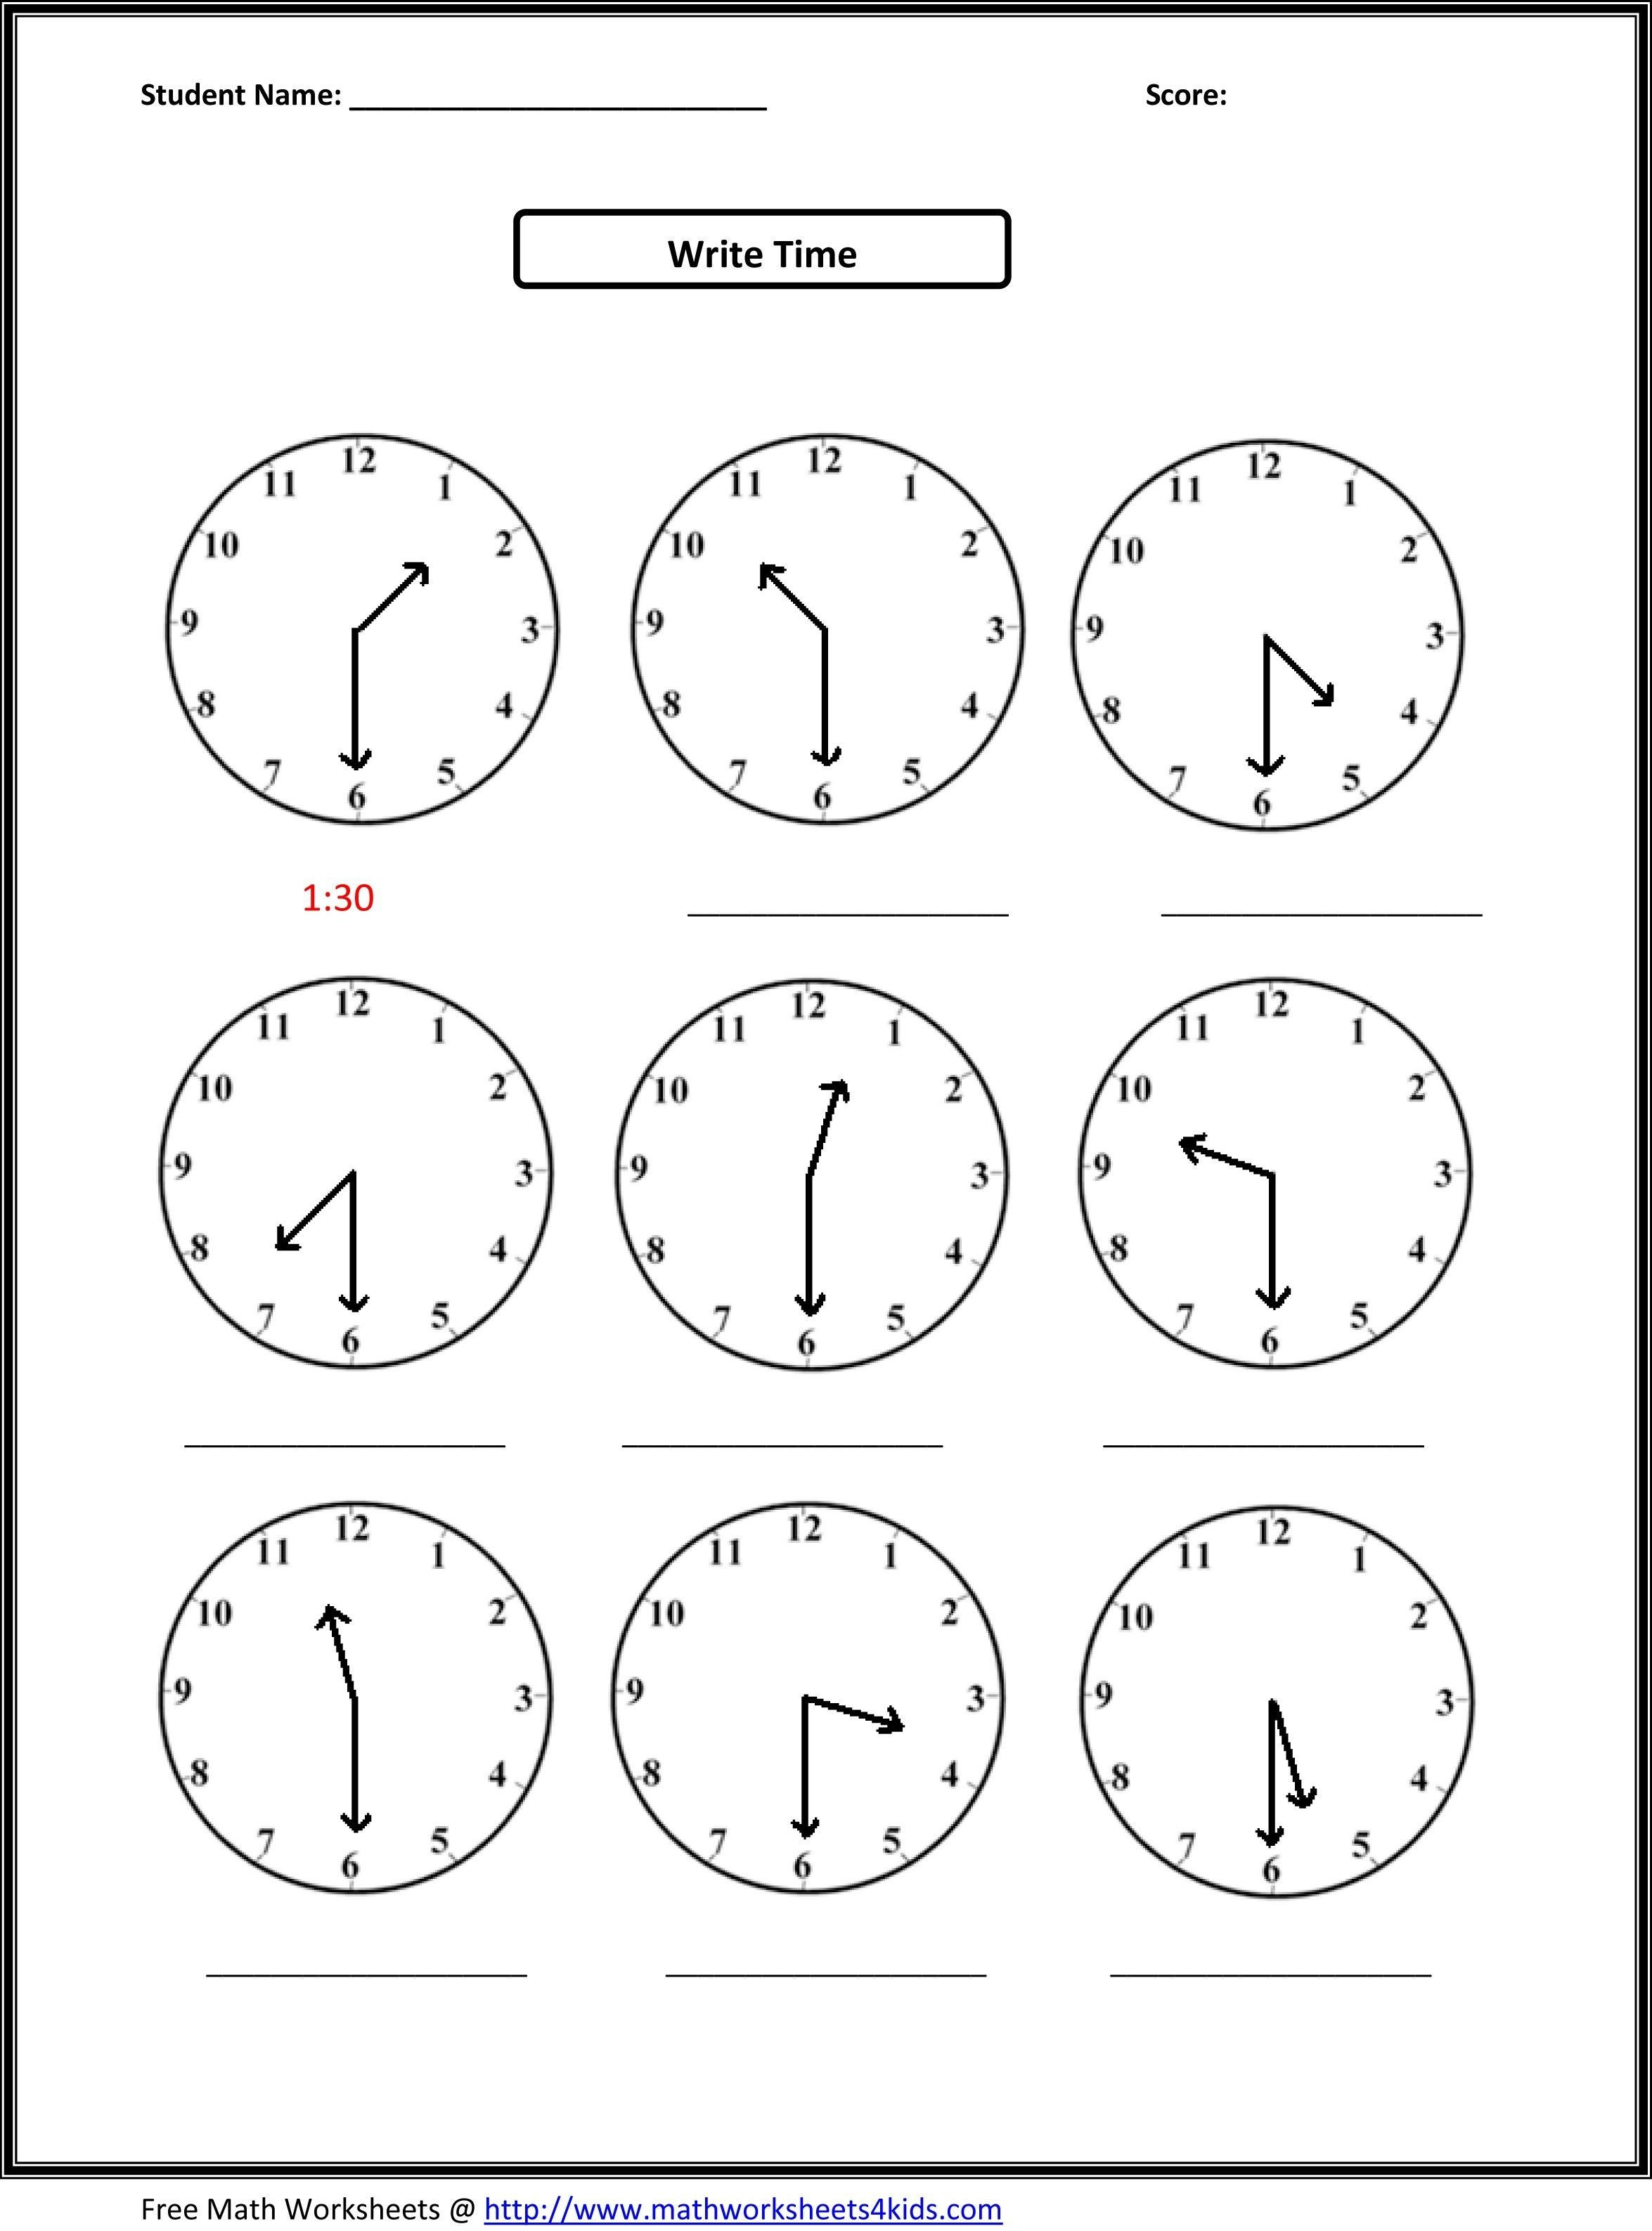 Telling Time Worksheets Ks3 New Clock Grade 3 Free Maths Printables - Free Printable Telling Time Worksheets